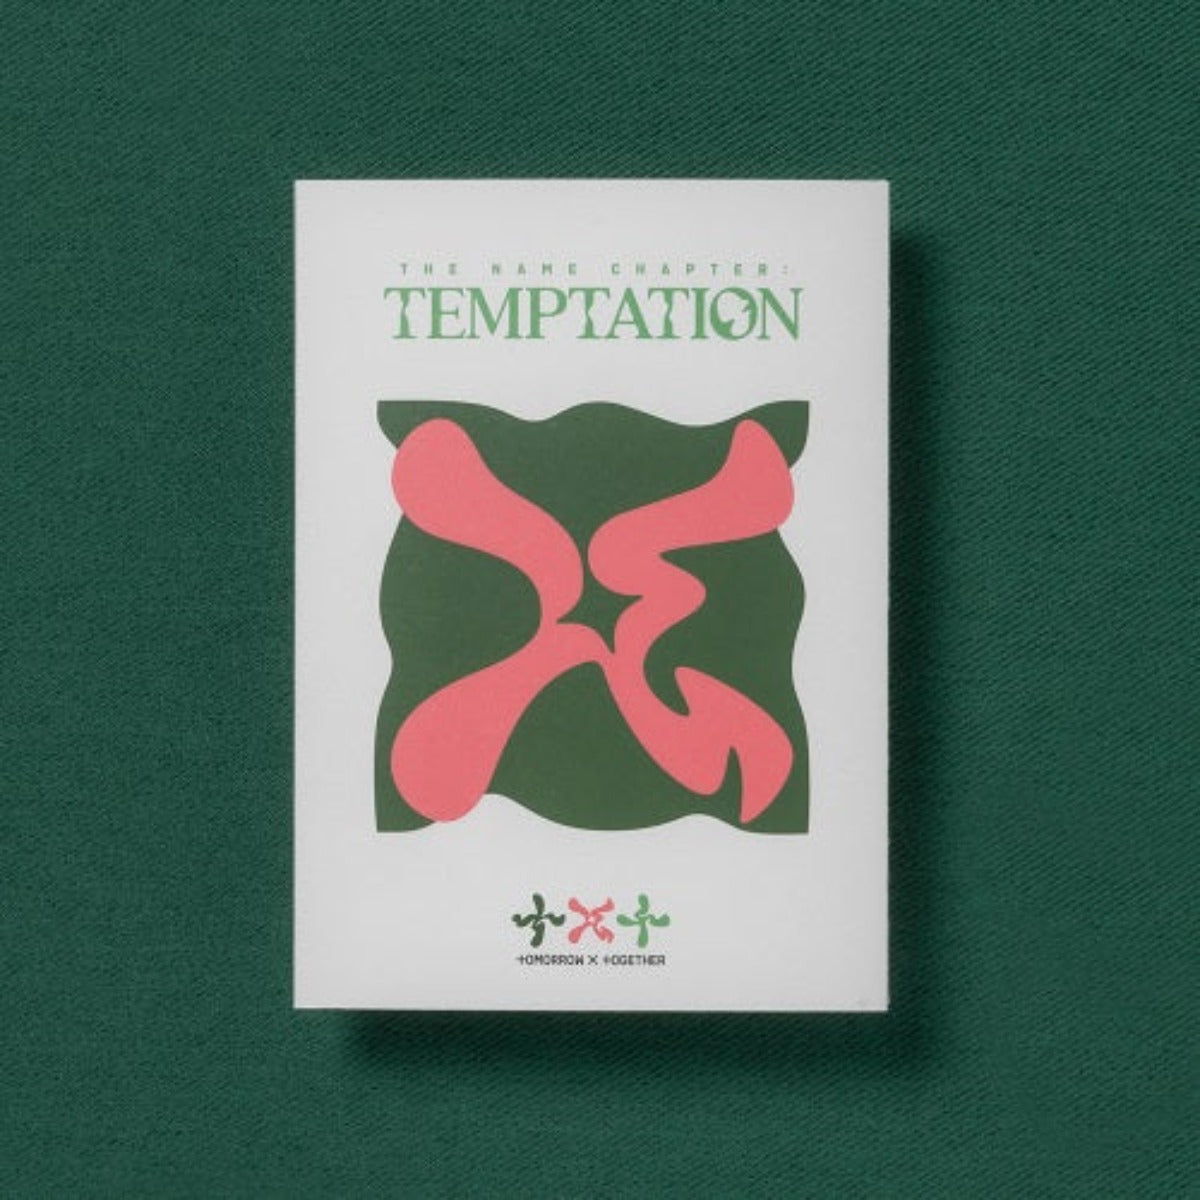 TXT Mini Album Vol. 5 - The Name Chapter: TEMPTATION (LULLABY Version)